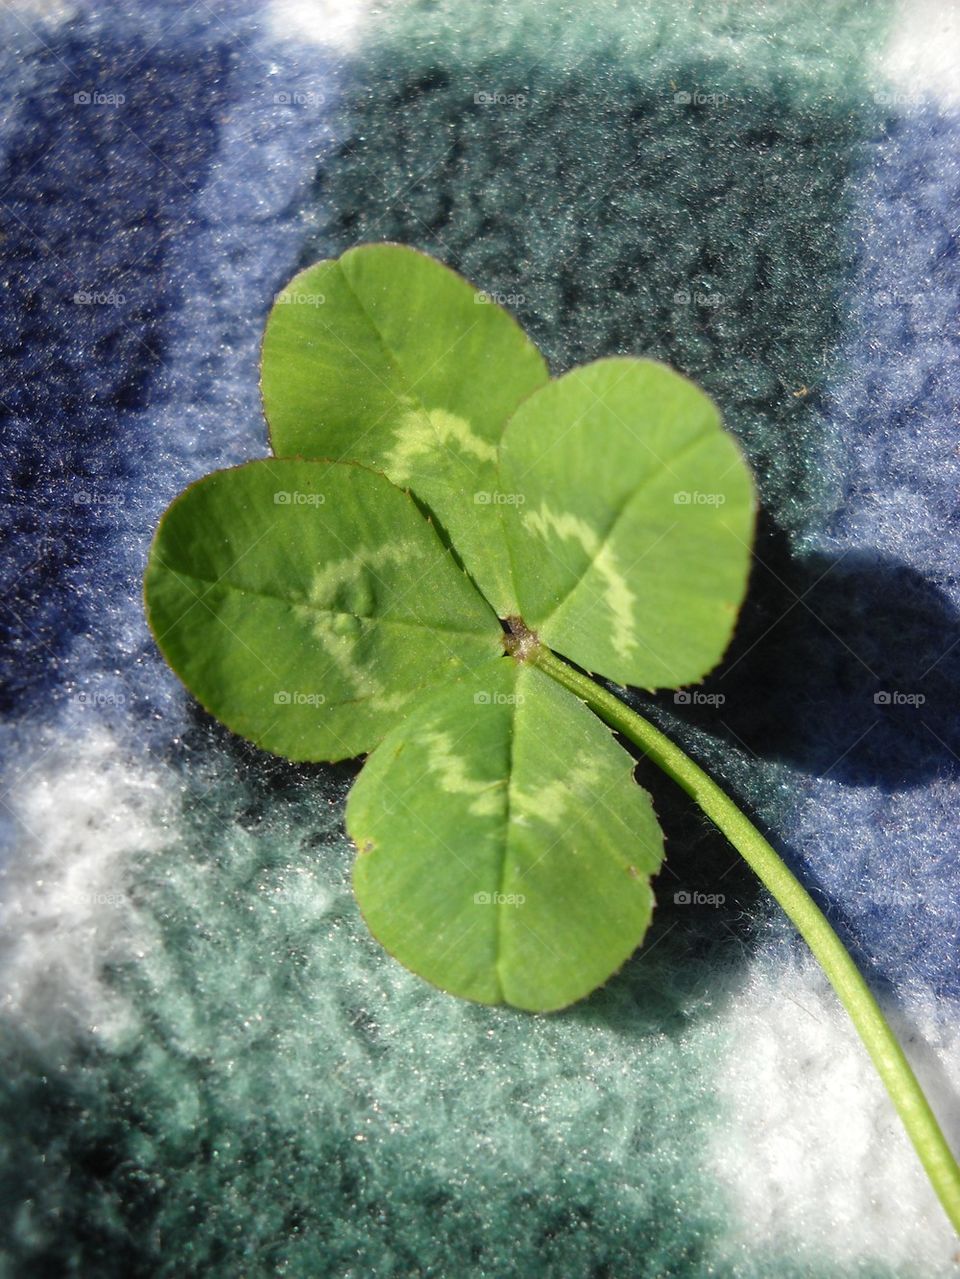 Four-Leaf clover